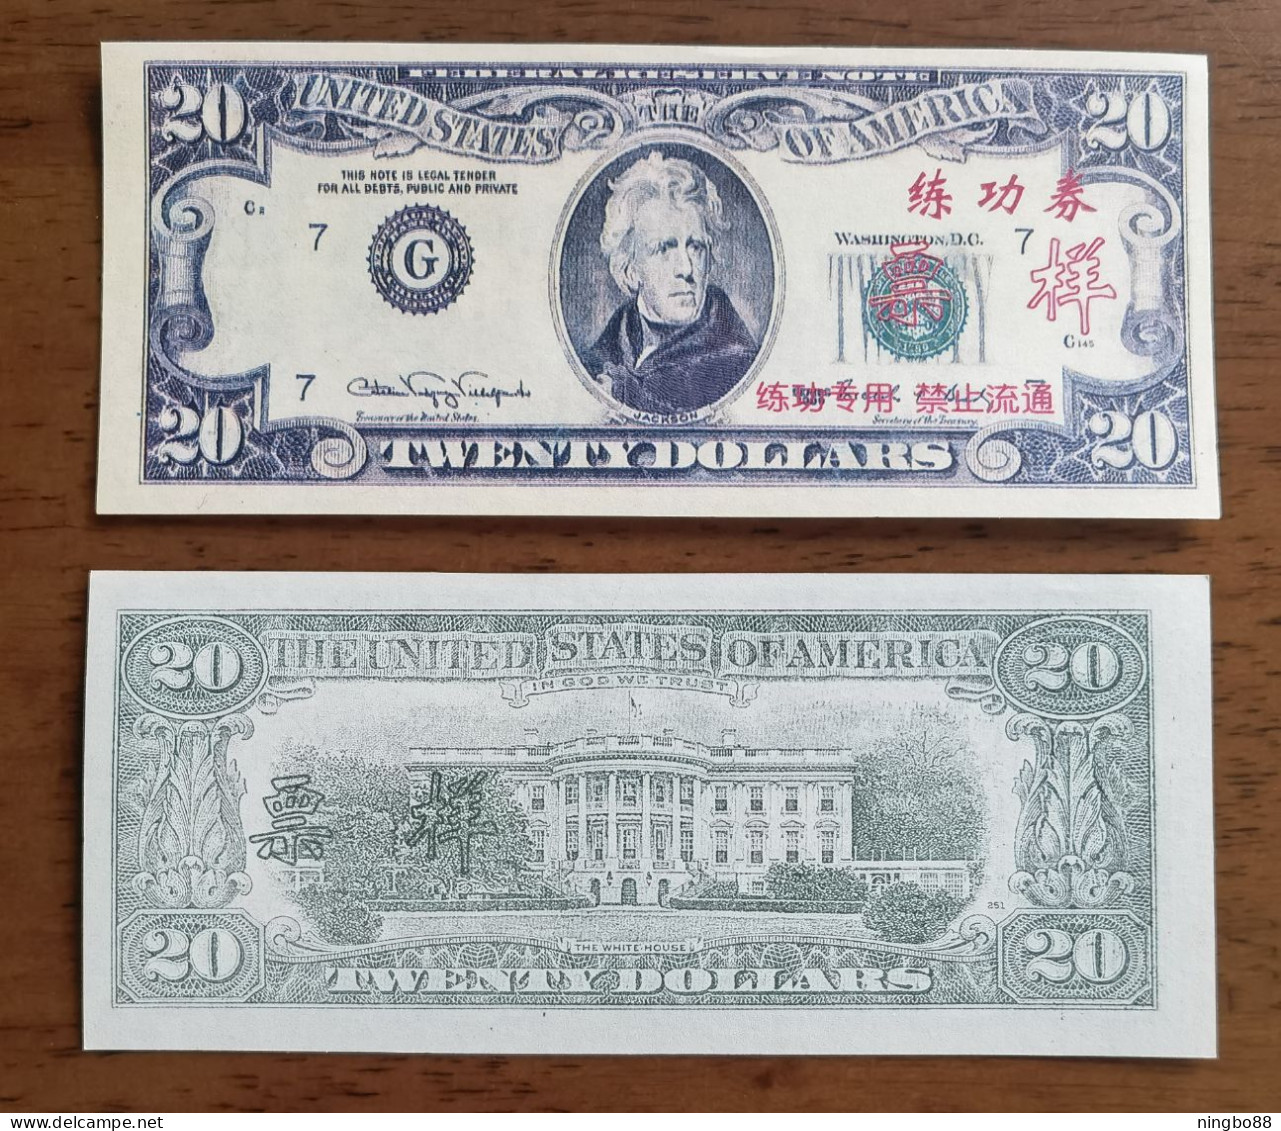 China BOC Bank (Bank Of China) Training/test Banknote,United States B-3 Series $20 Dollars Note Specimen Overprint - Sets & Sammlungen